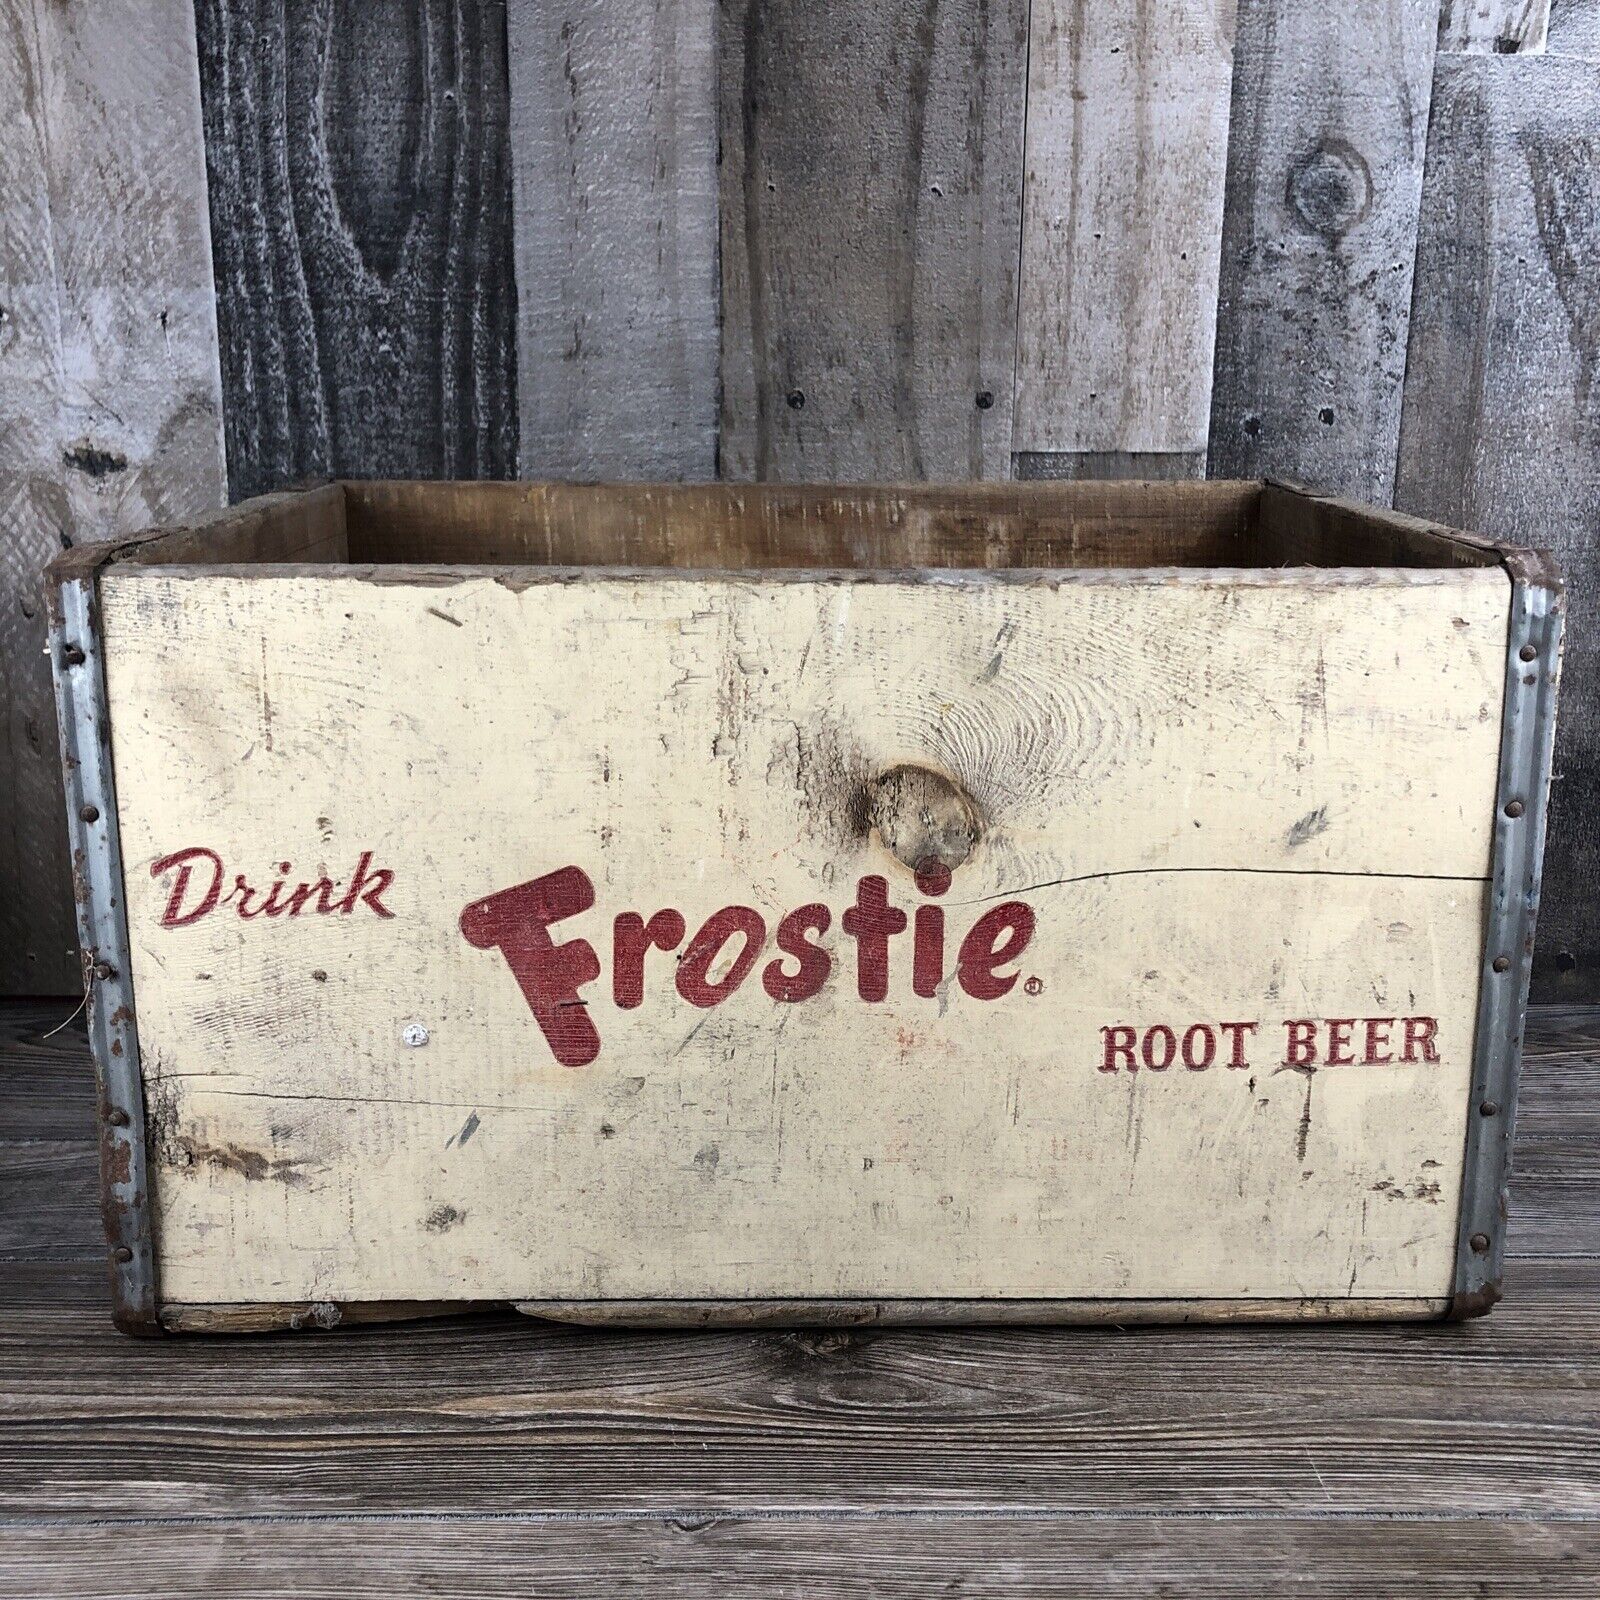 Vintage Drink Frostie Root Beer Soda Pop Advertising Wooden Crate Box